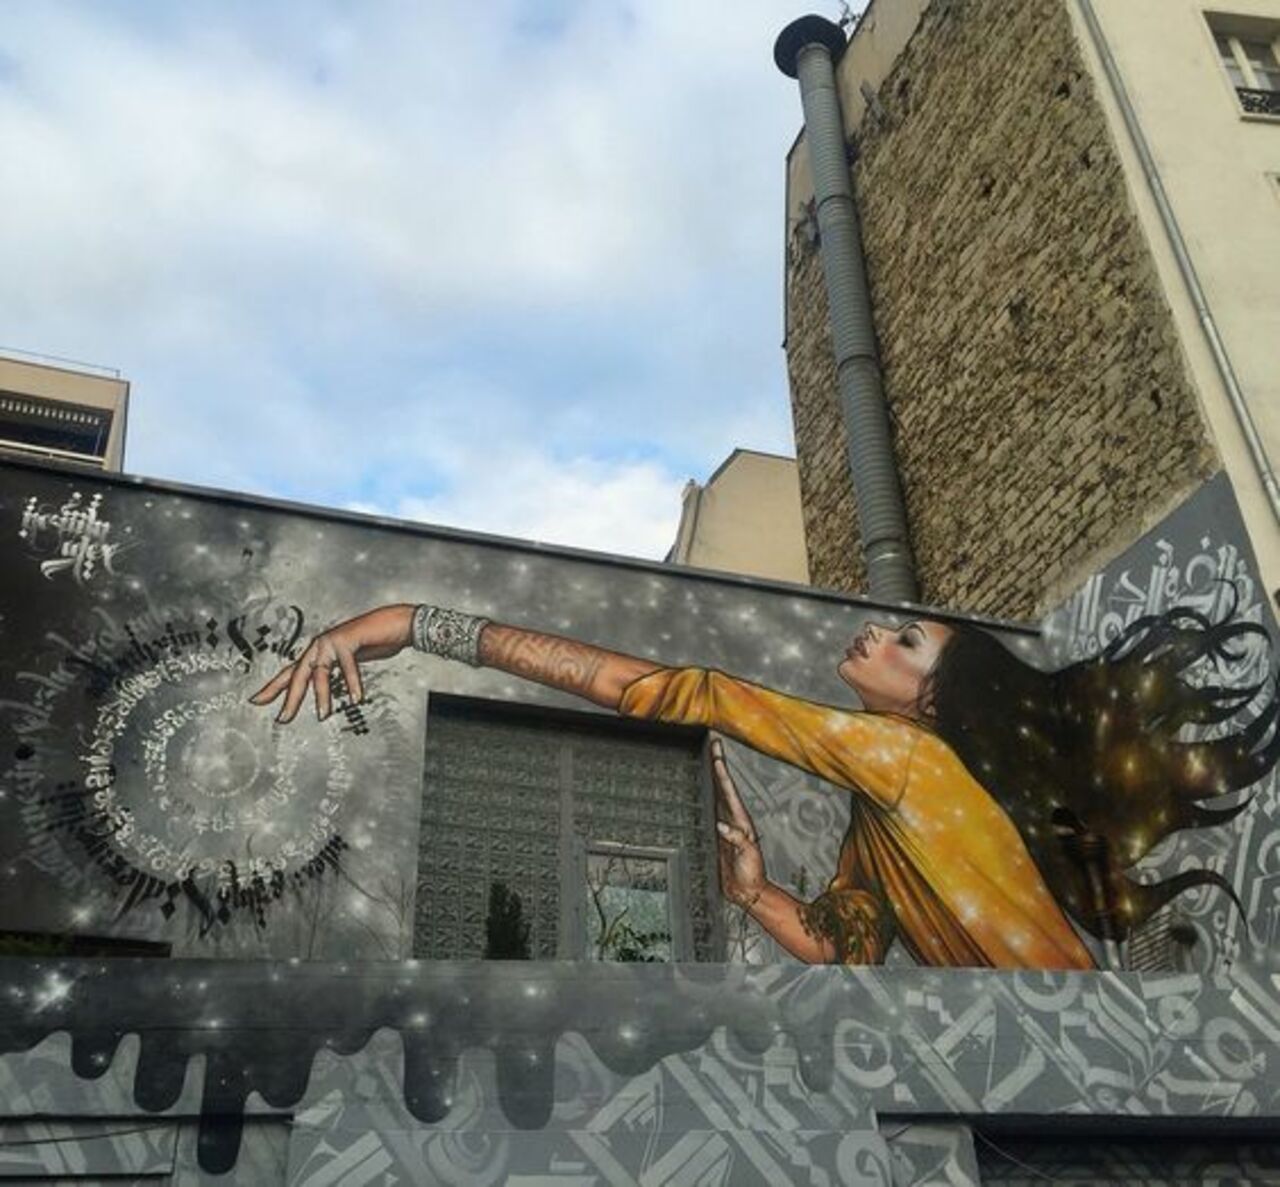 Cosmic Girl        •       #streetart #graffiti #art  . : https://t.co/aN3T5vjJDq